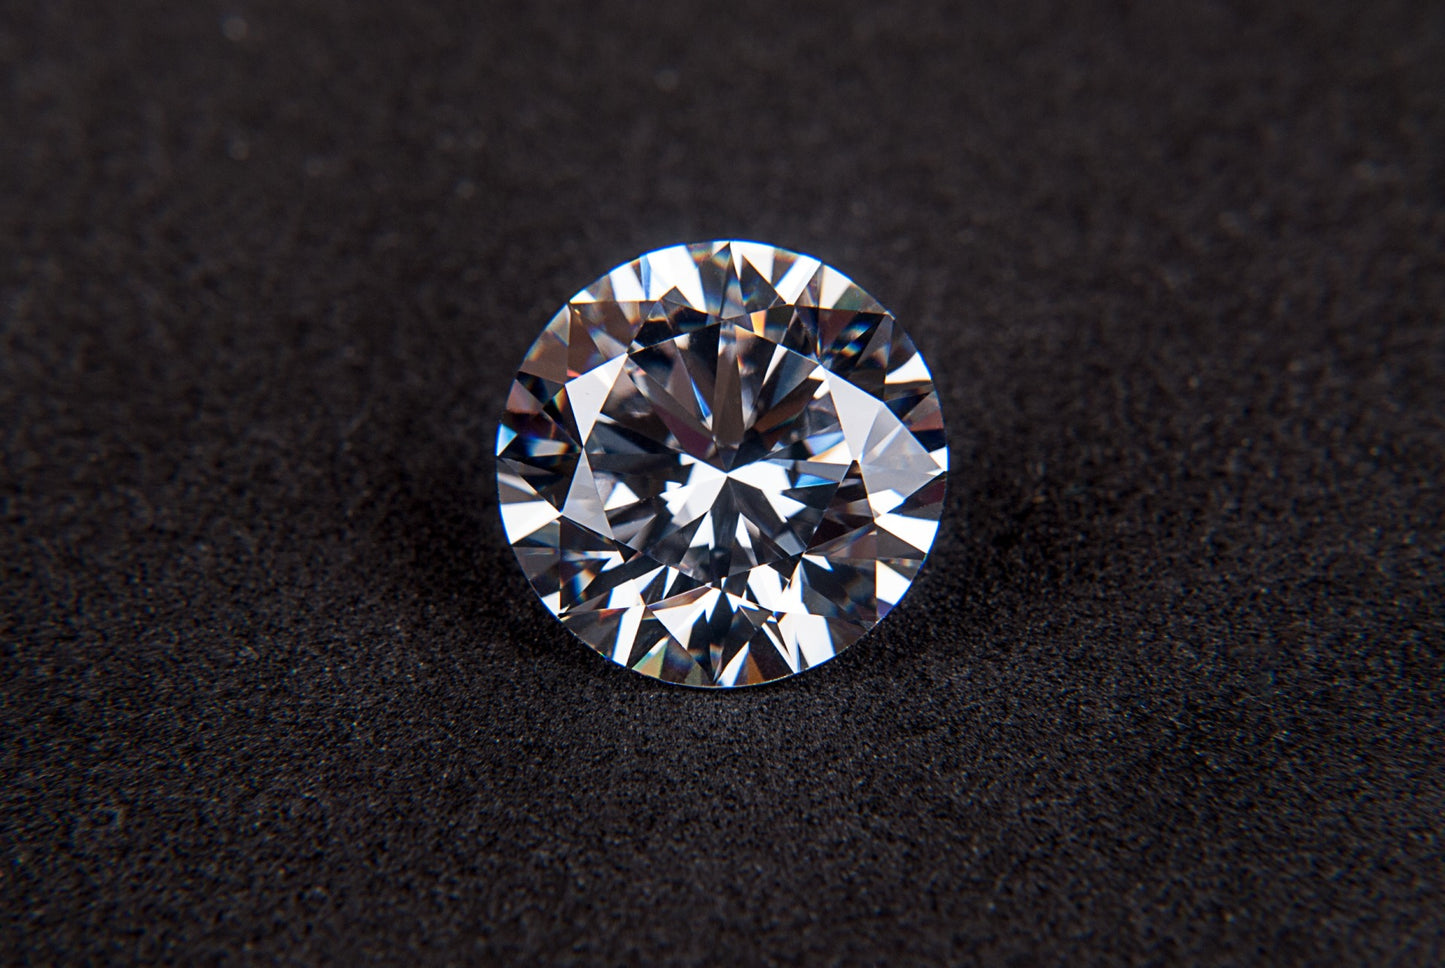 Diamond 0.9 carat brilliant cut D color VS1 clarity